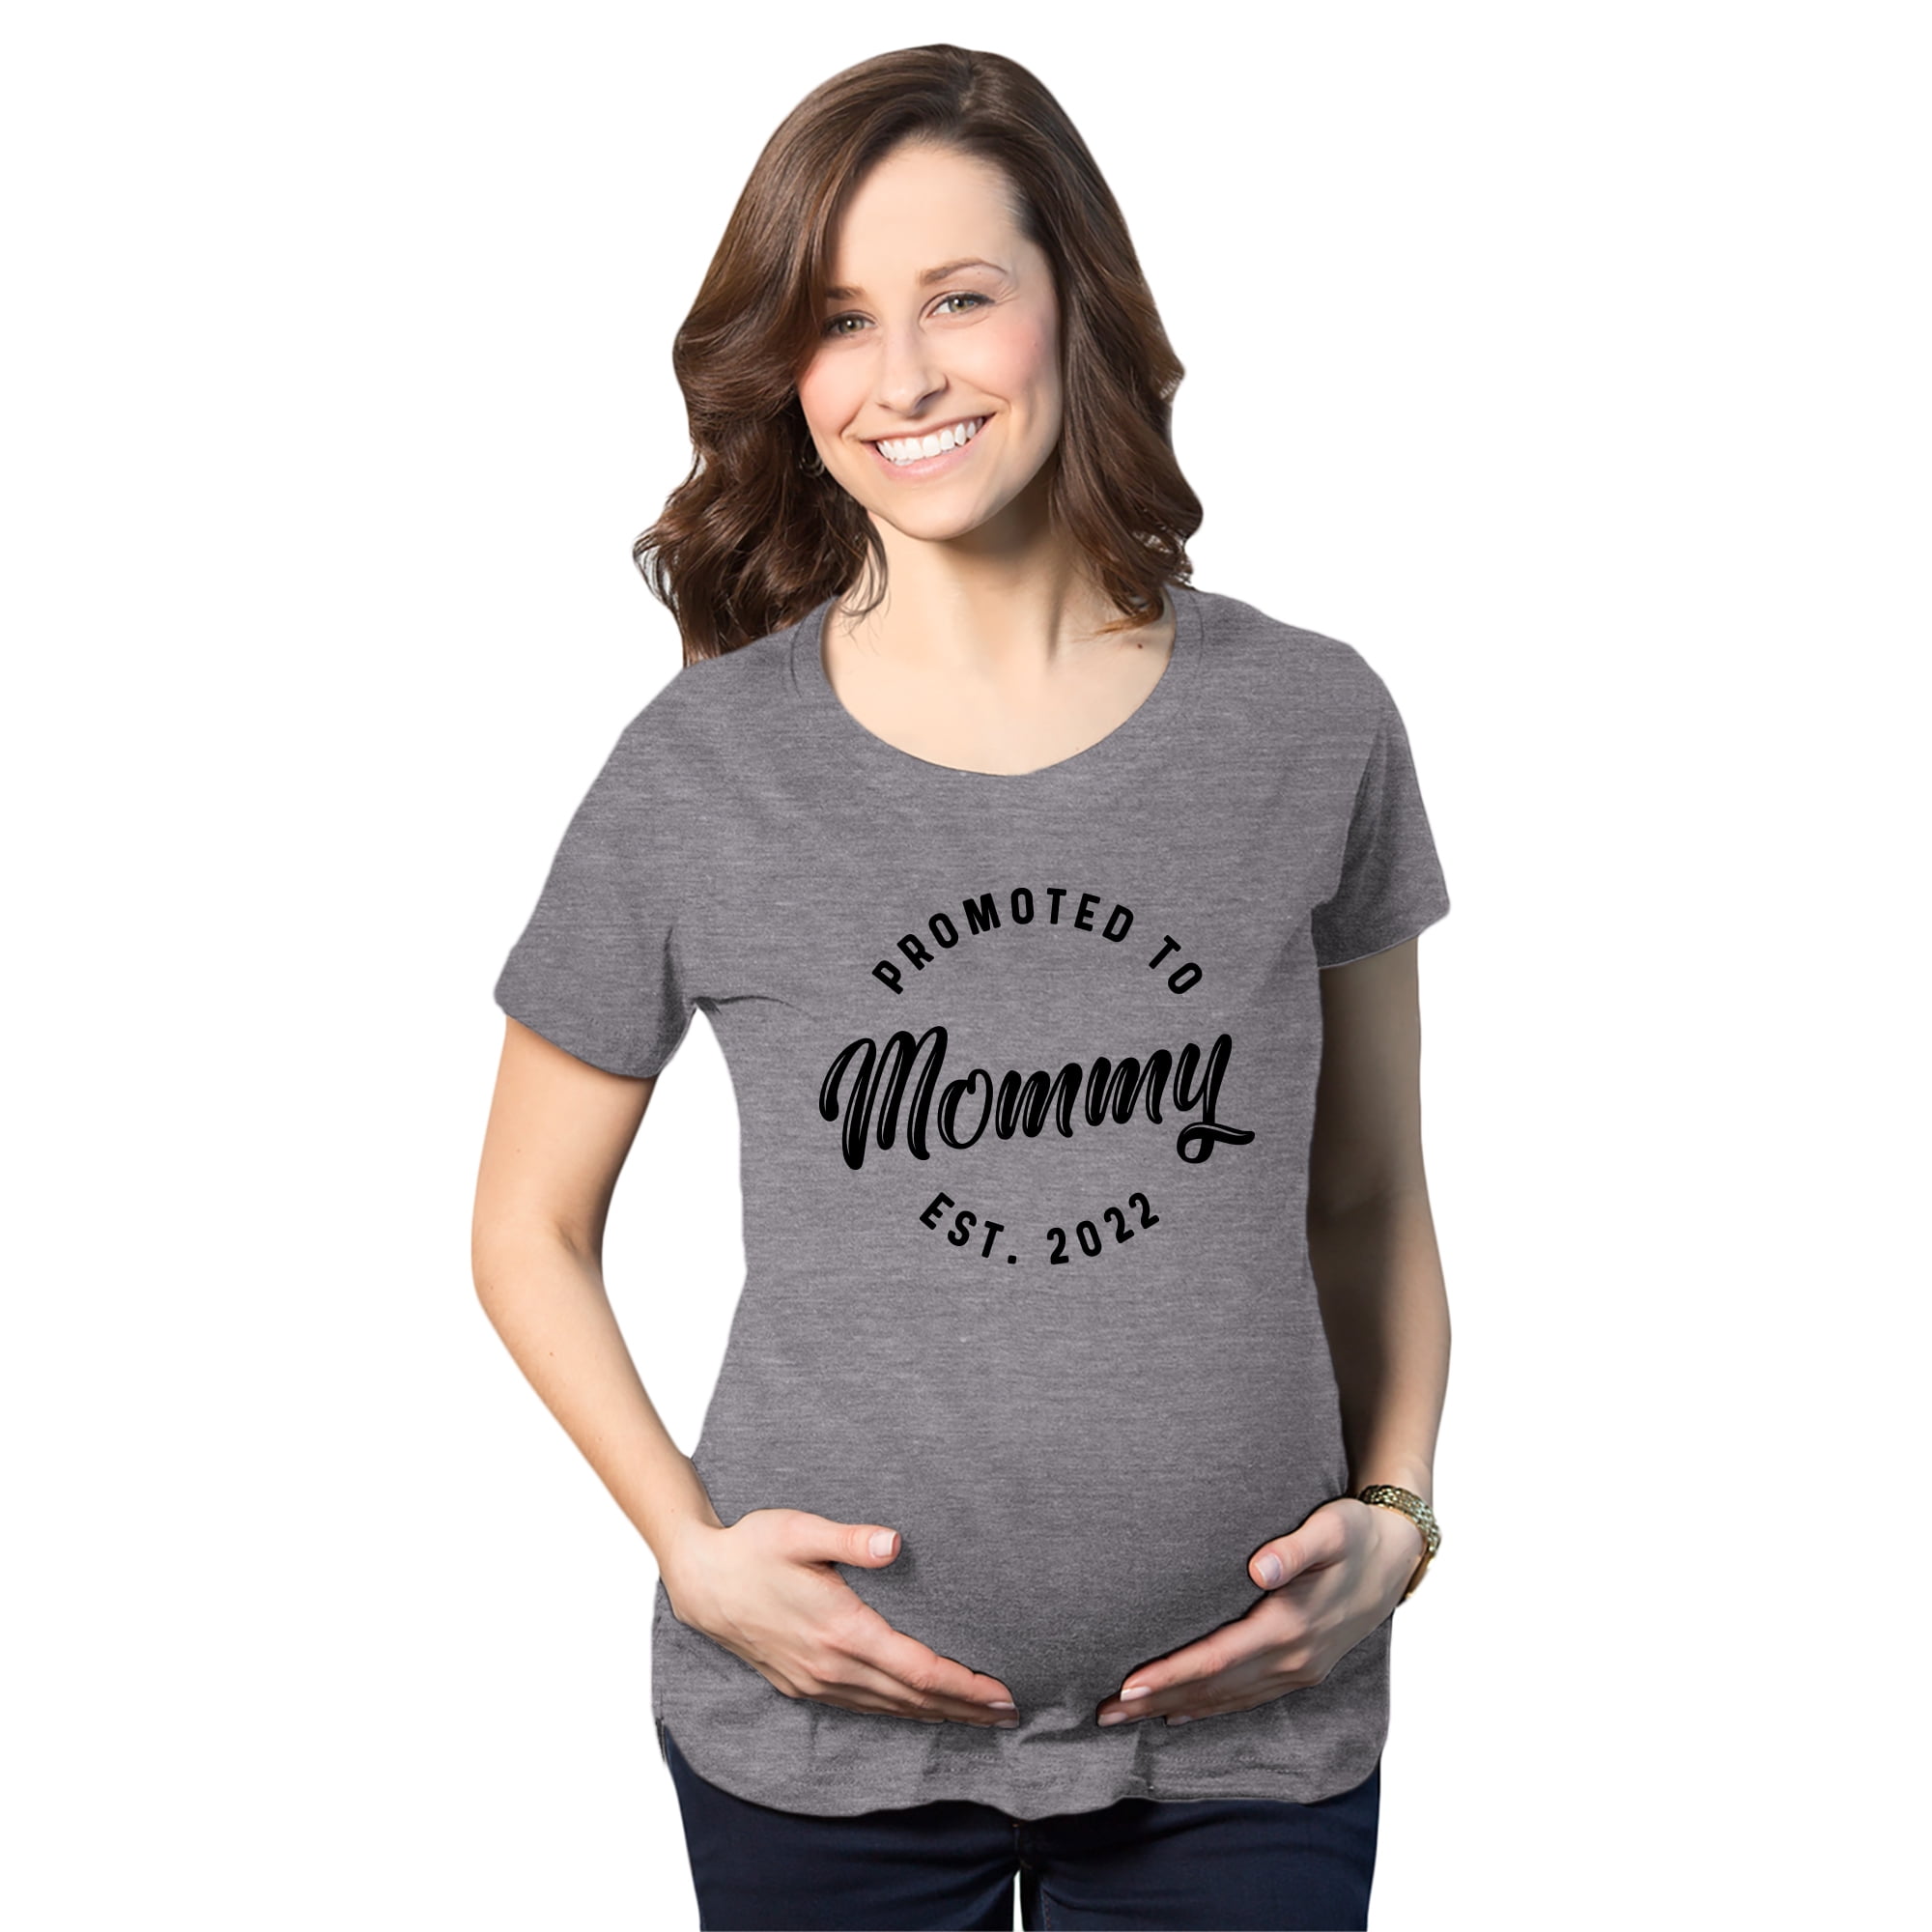 Womens Maternity T-Shirt Girl Power Leopard Print Slogan Pregnancy Fashion